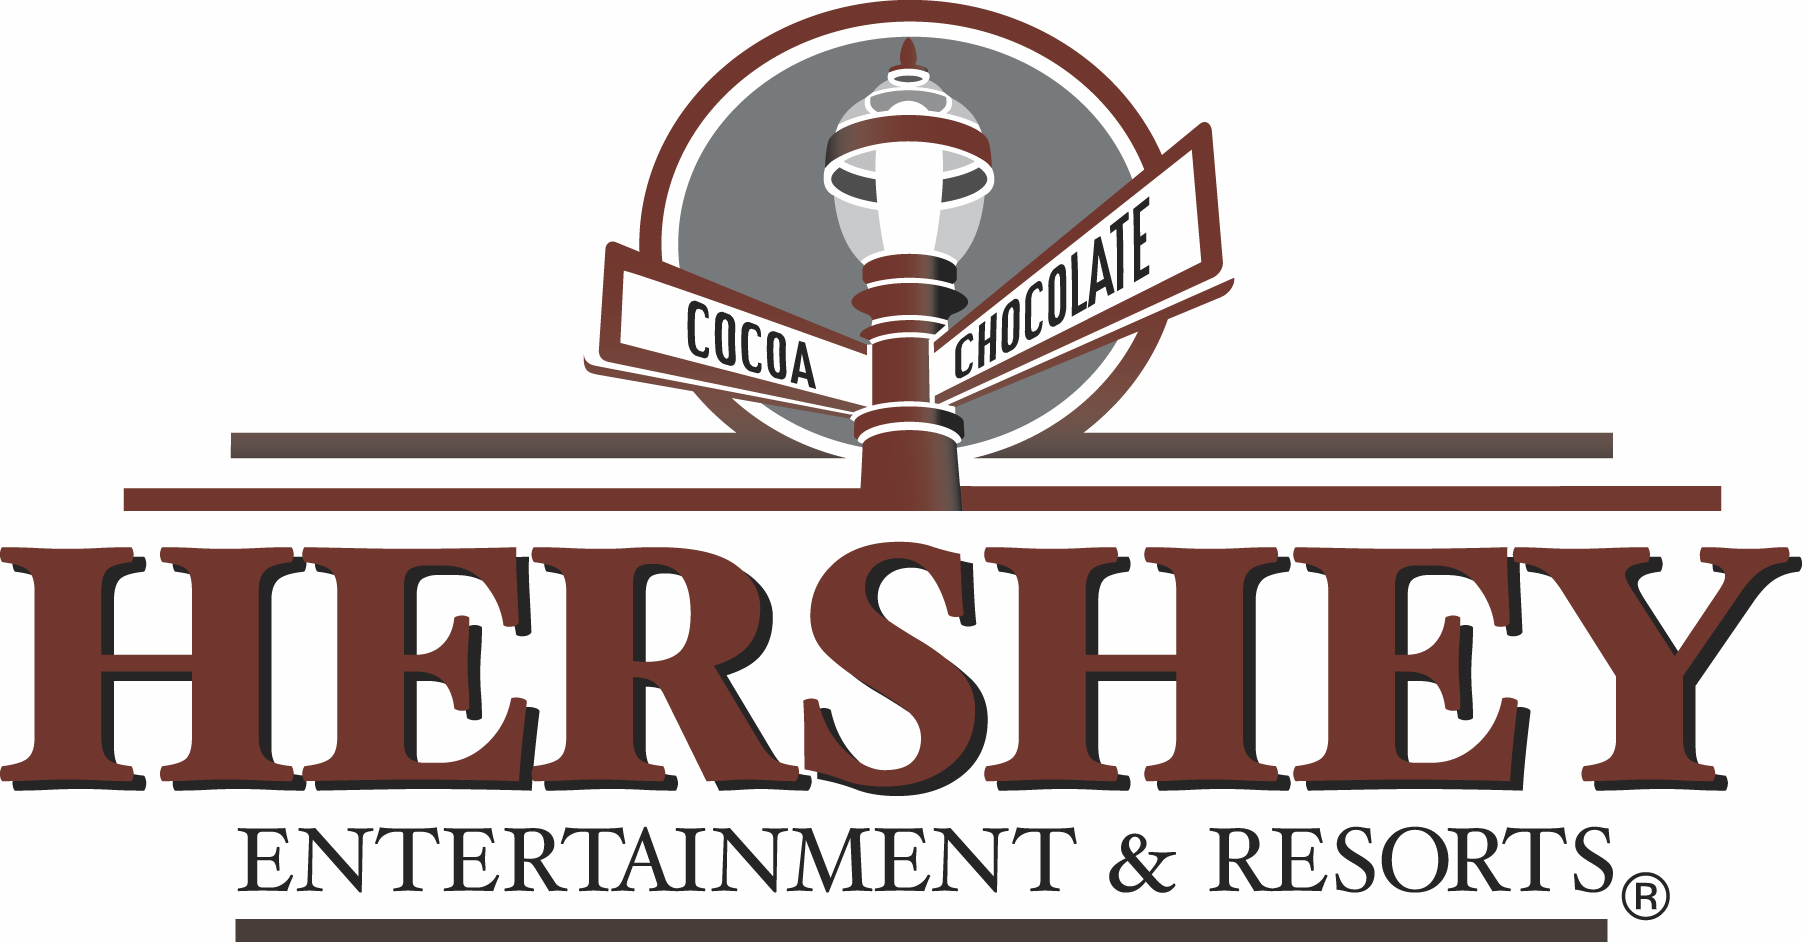 Hershey Entertainment & Resorts Company